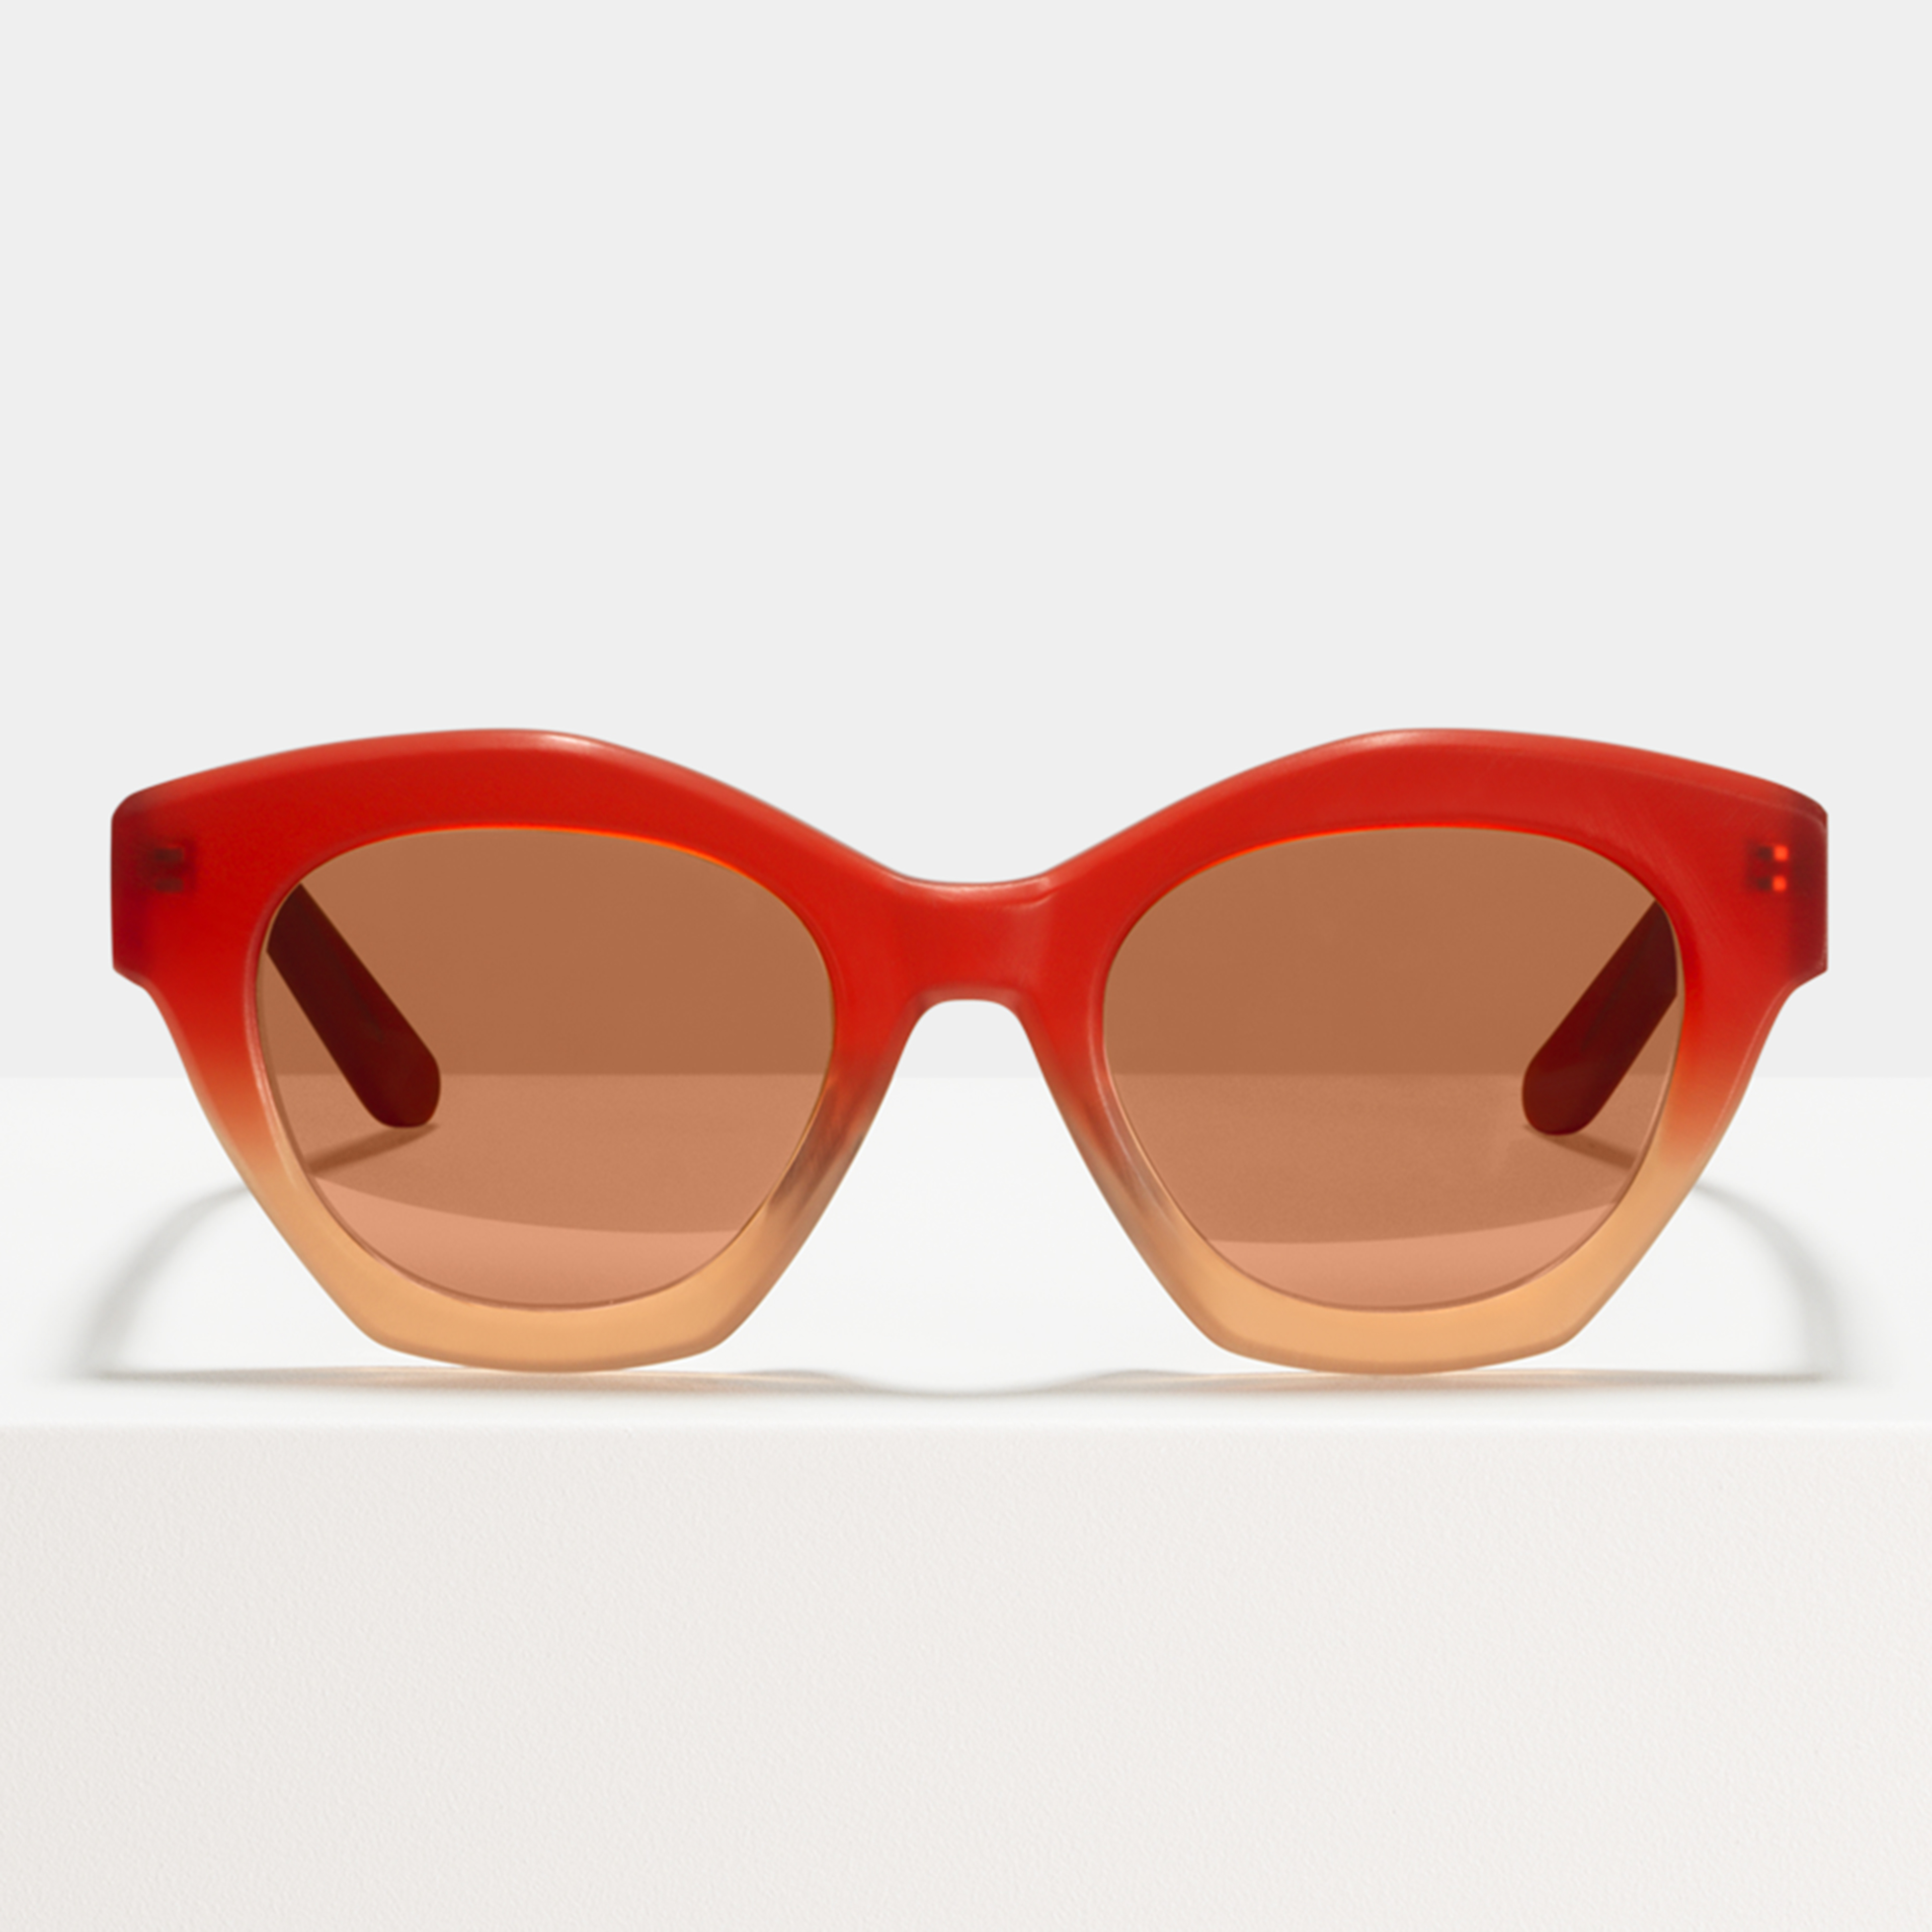 Ace & Tate Sunglasses |  Acetate in Orange, Red